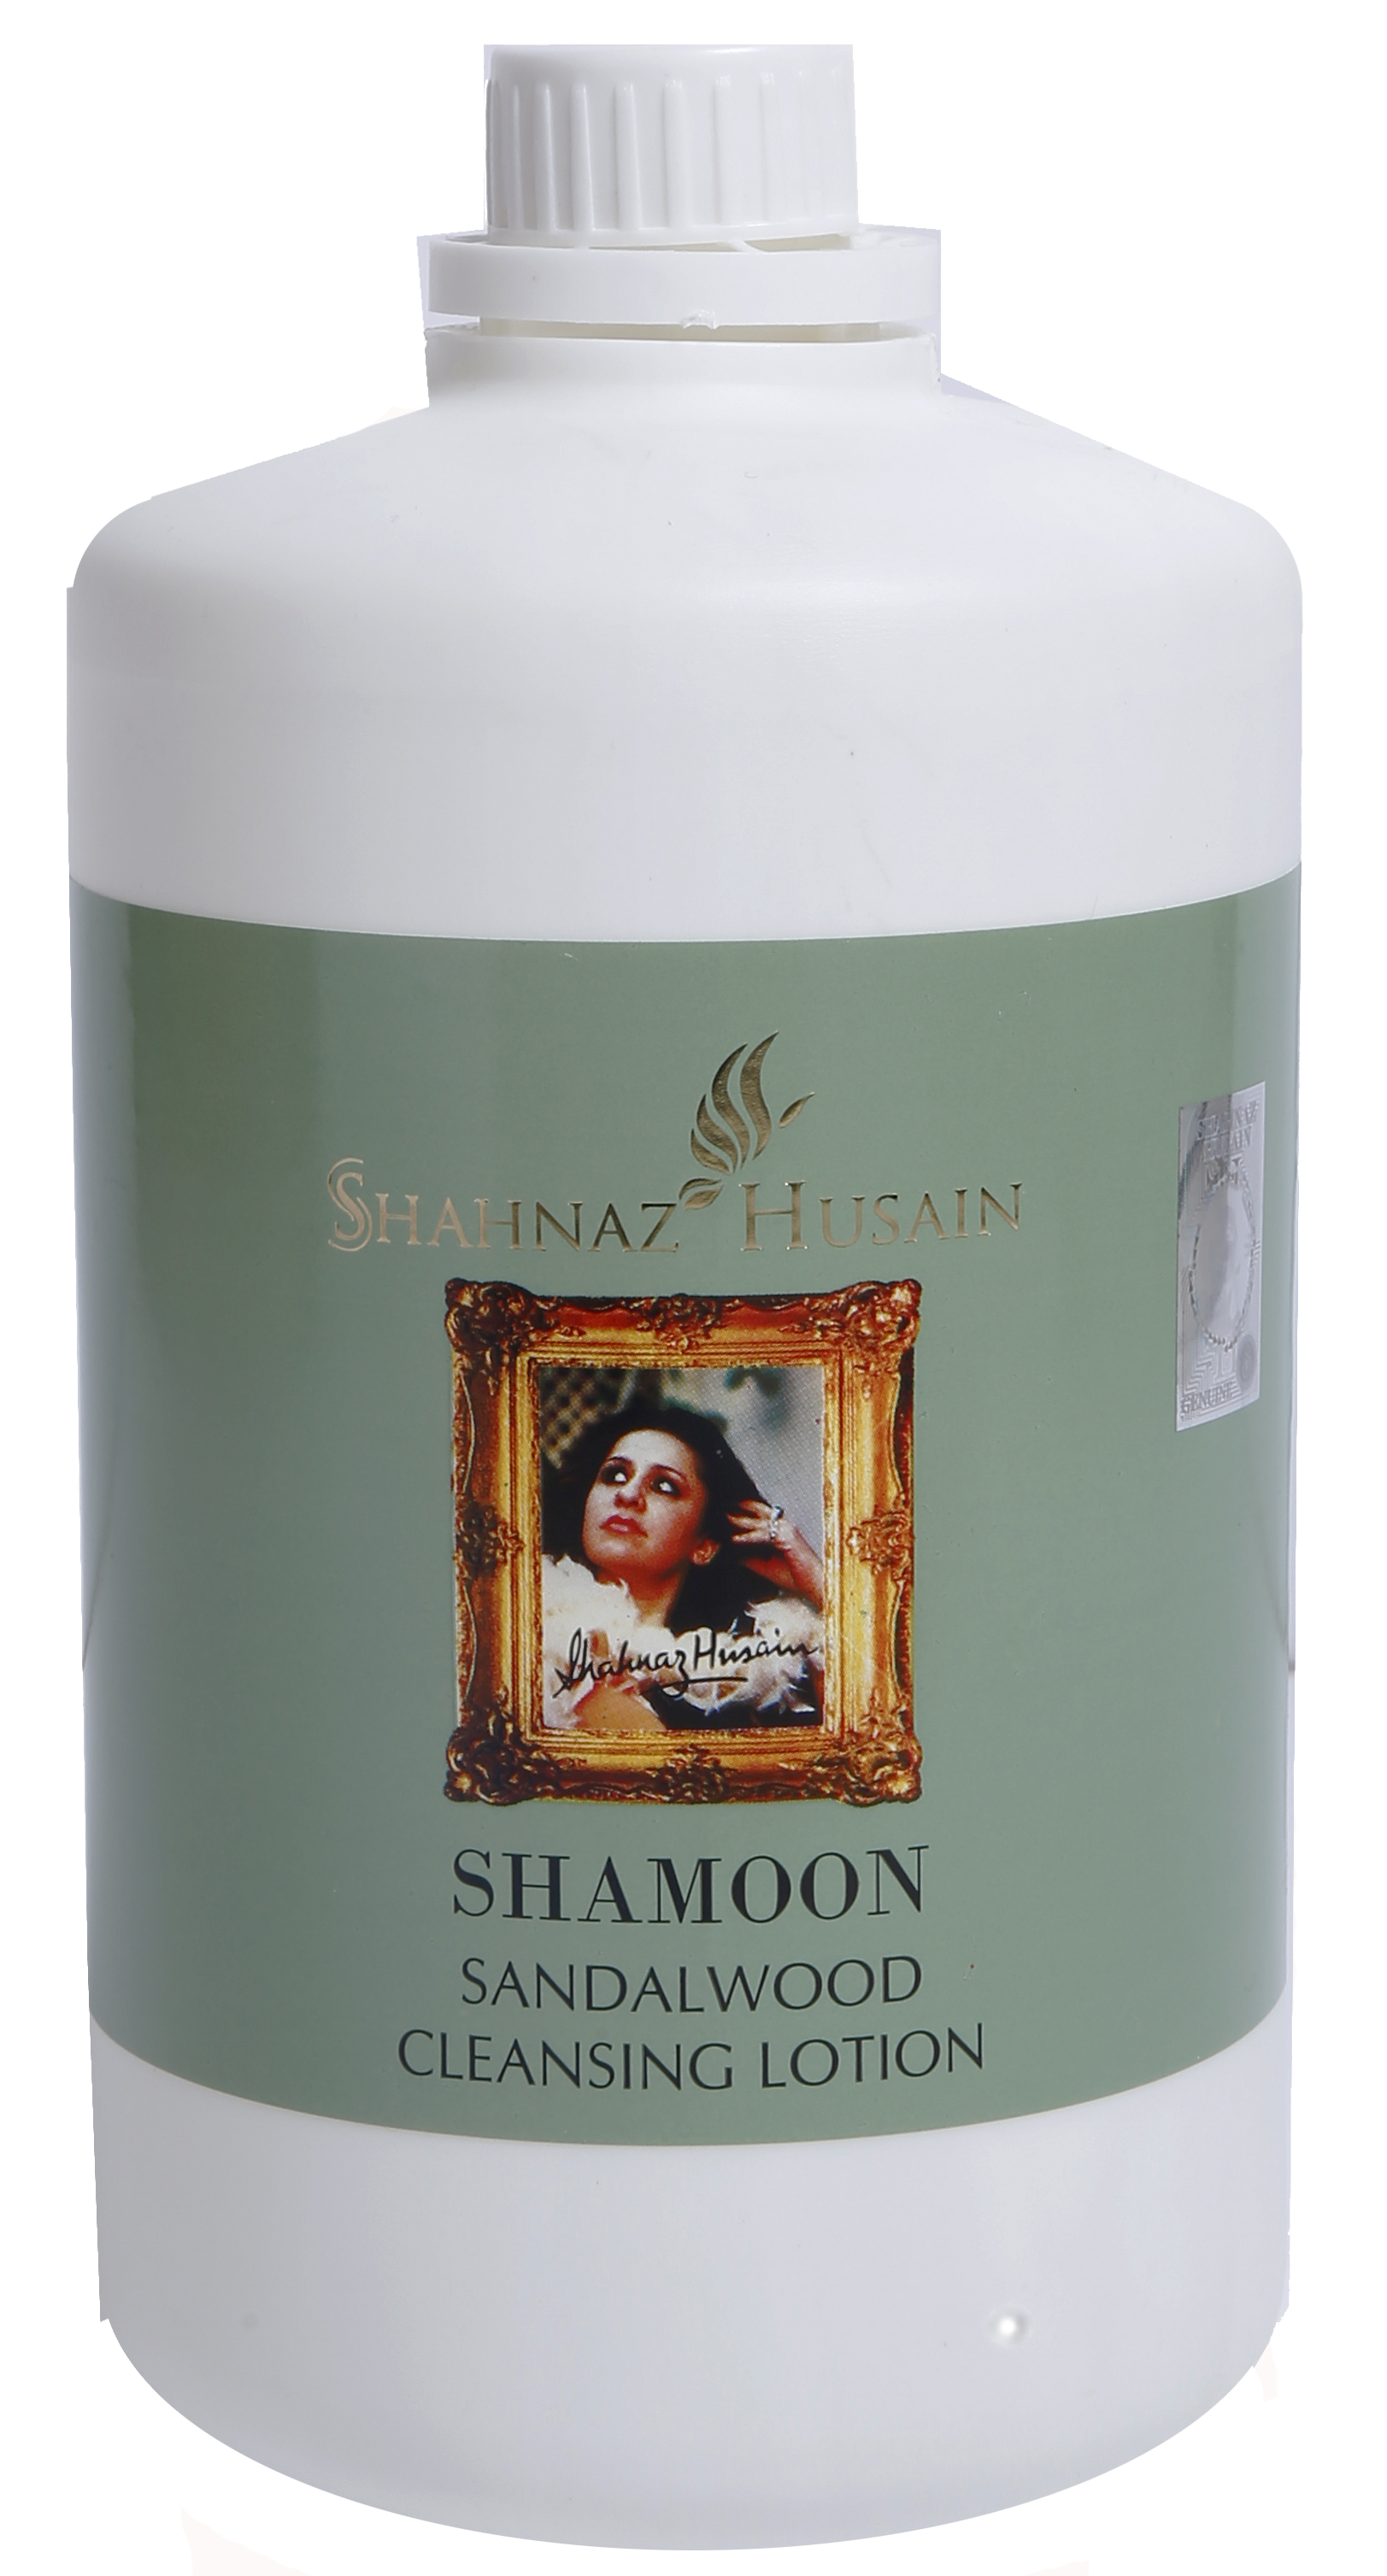 Shahnaz Husain Shamoon Salon Size Facial Cleanser